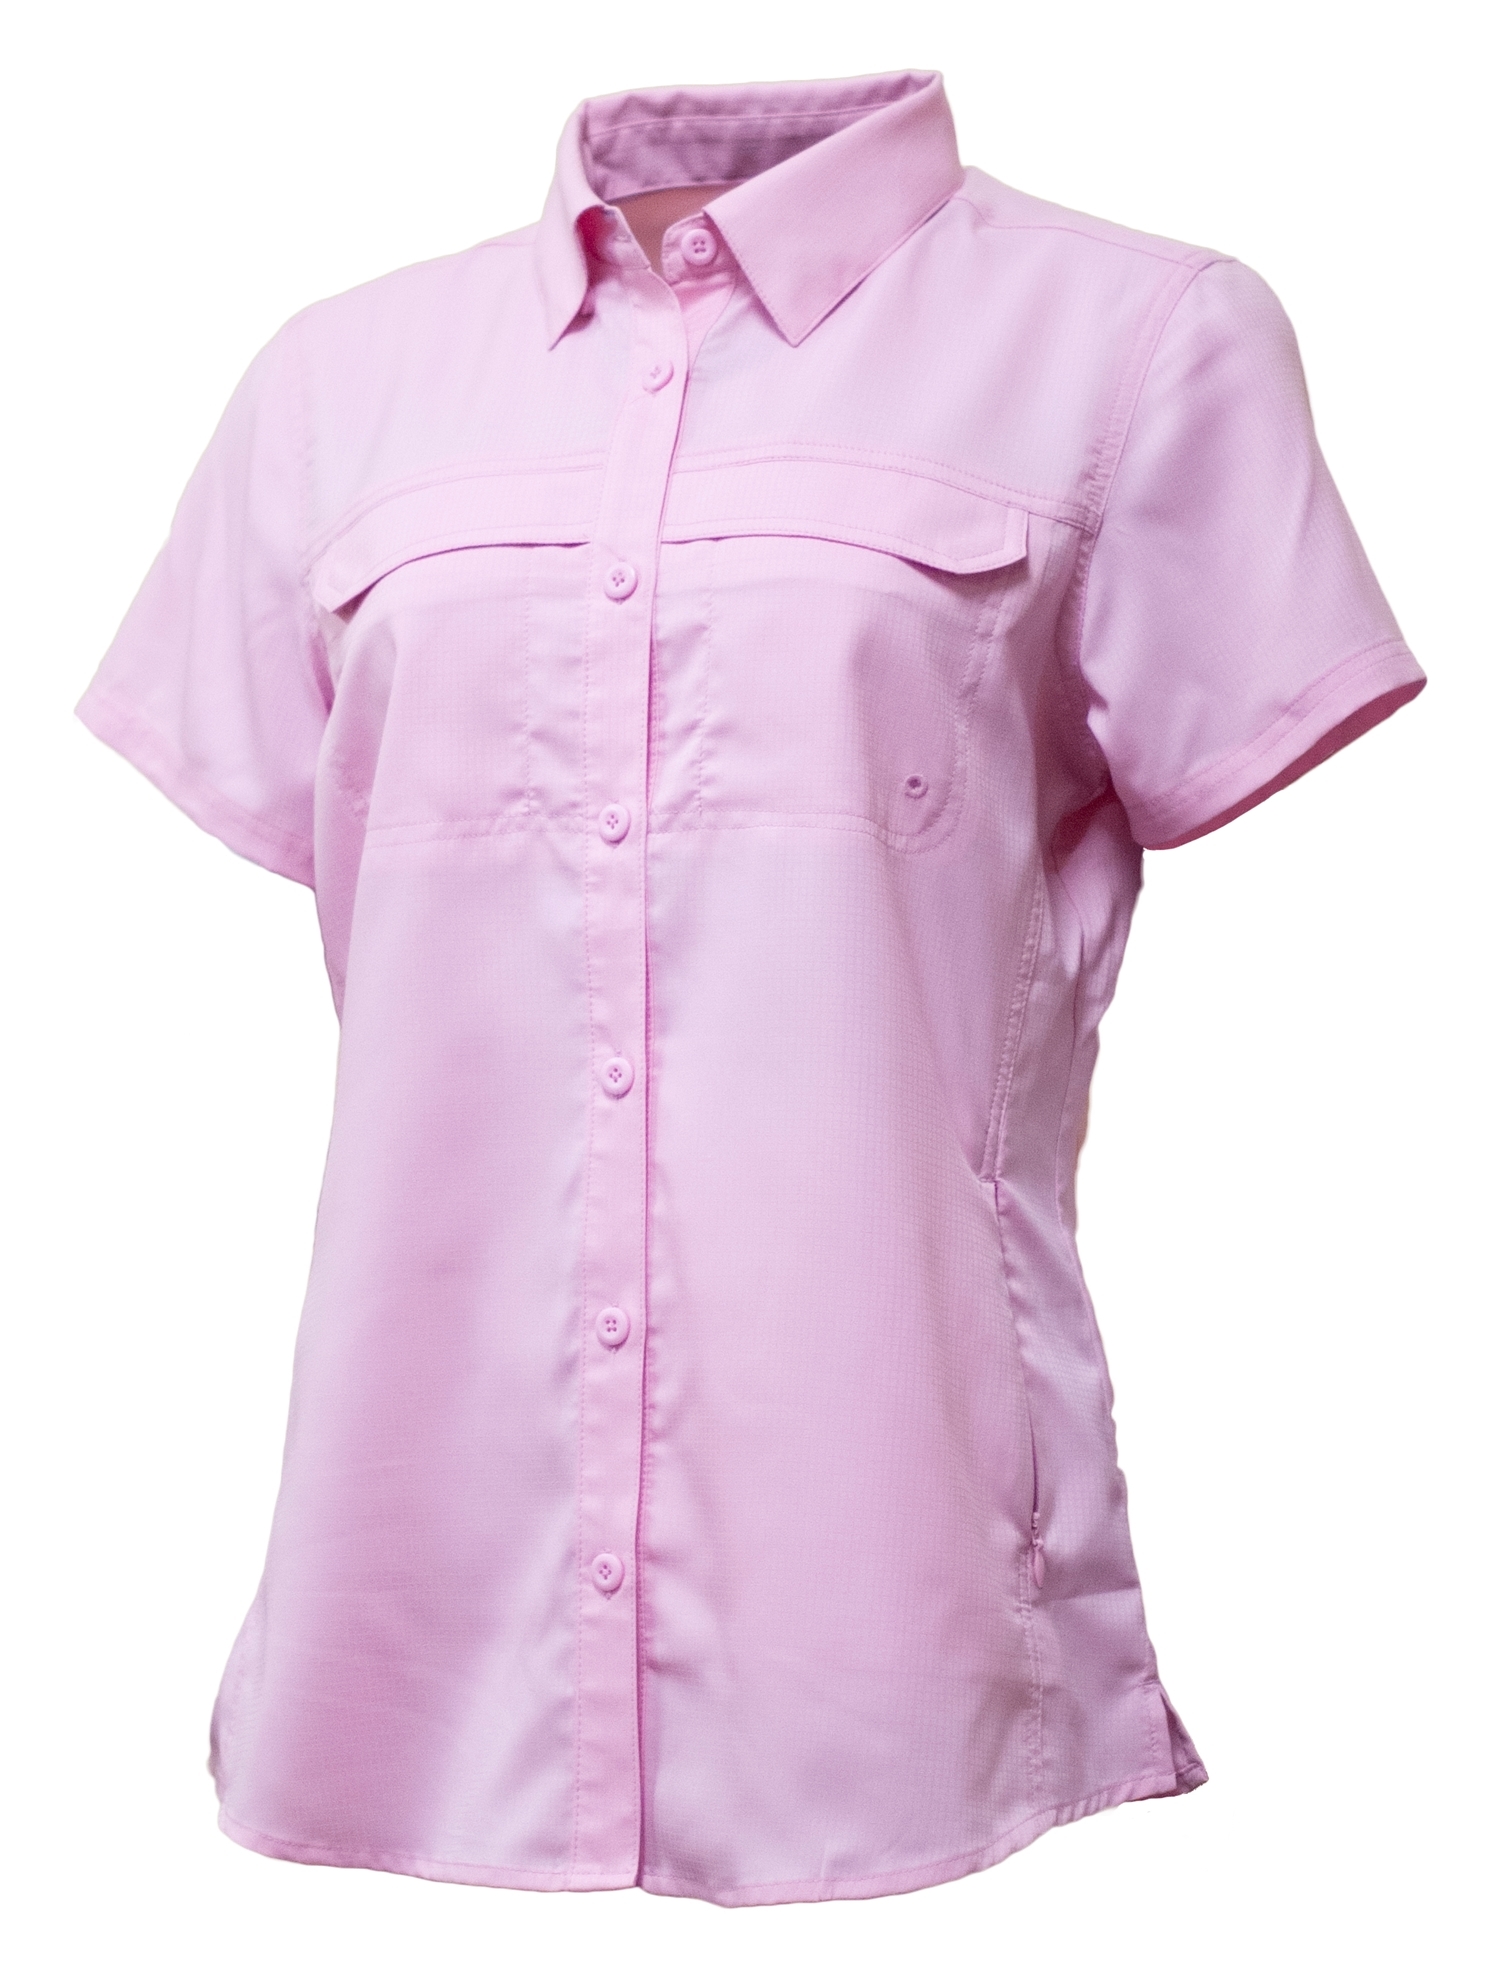 BAW Athletic Wear 3100 - Adult Short Sleeve Fishing Shirt $23.10